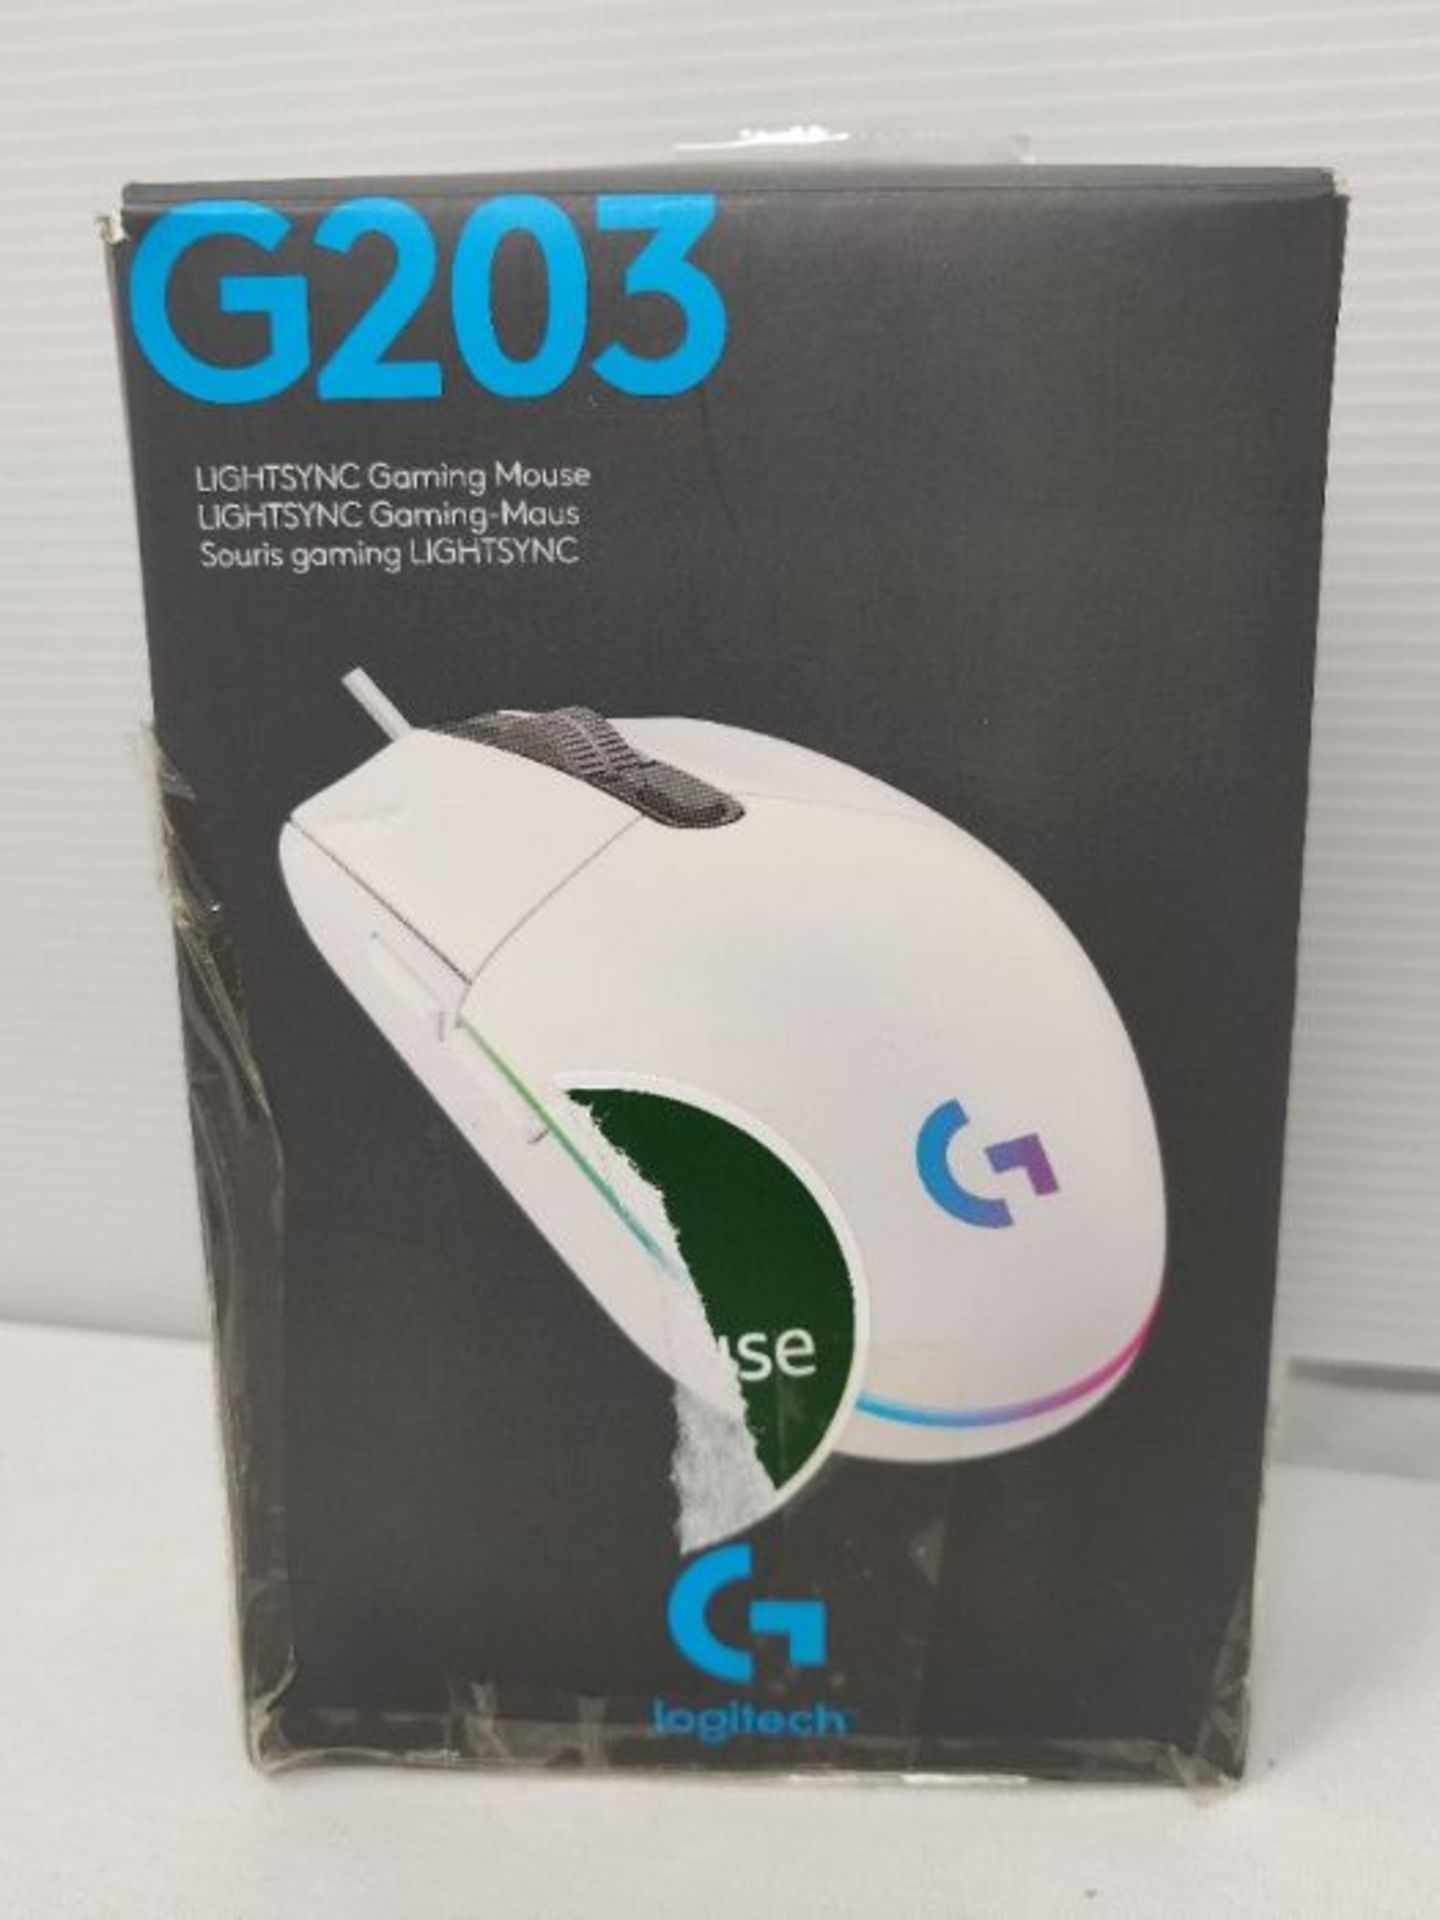 Logitech G203 LIGHTSYNC Gaming Mouse with Customizable RGB Lighting, 6 Programmable Bu - Image 2 of 3